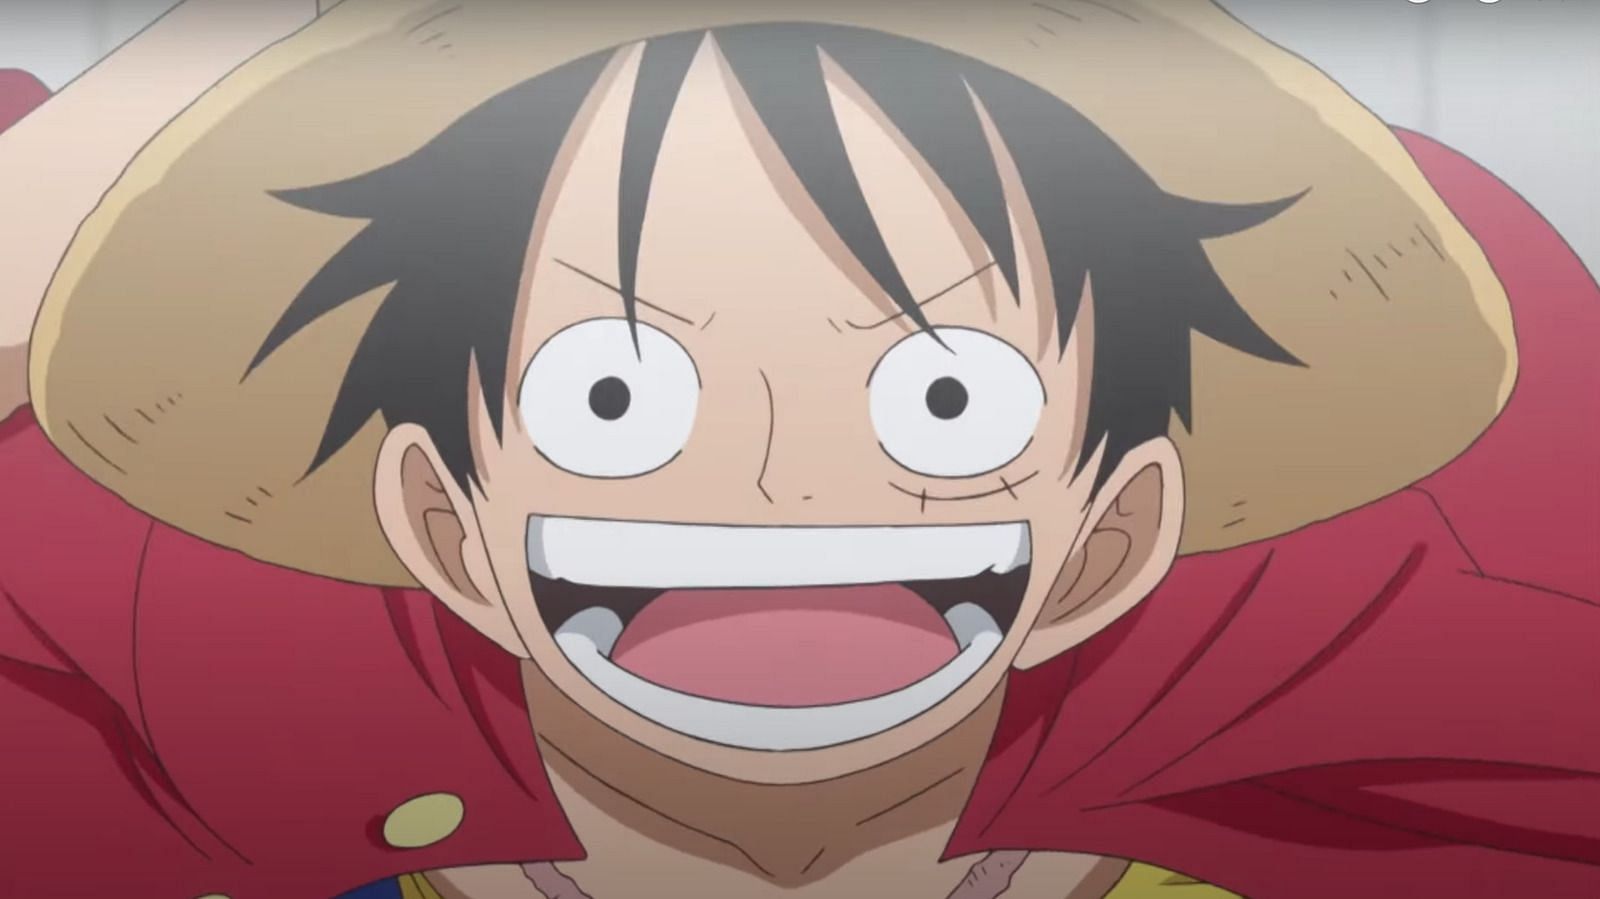 Luffy from One Piece (Image via Studio Toei Animation)